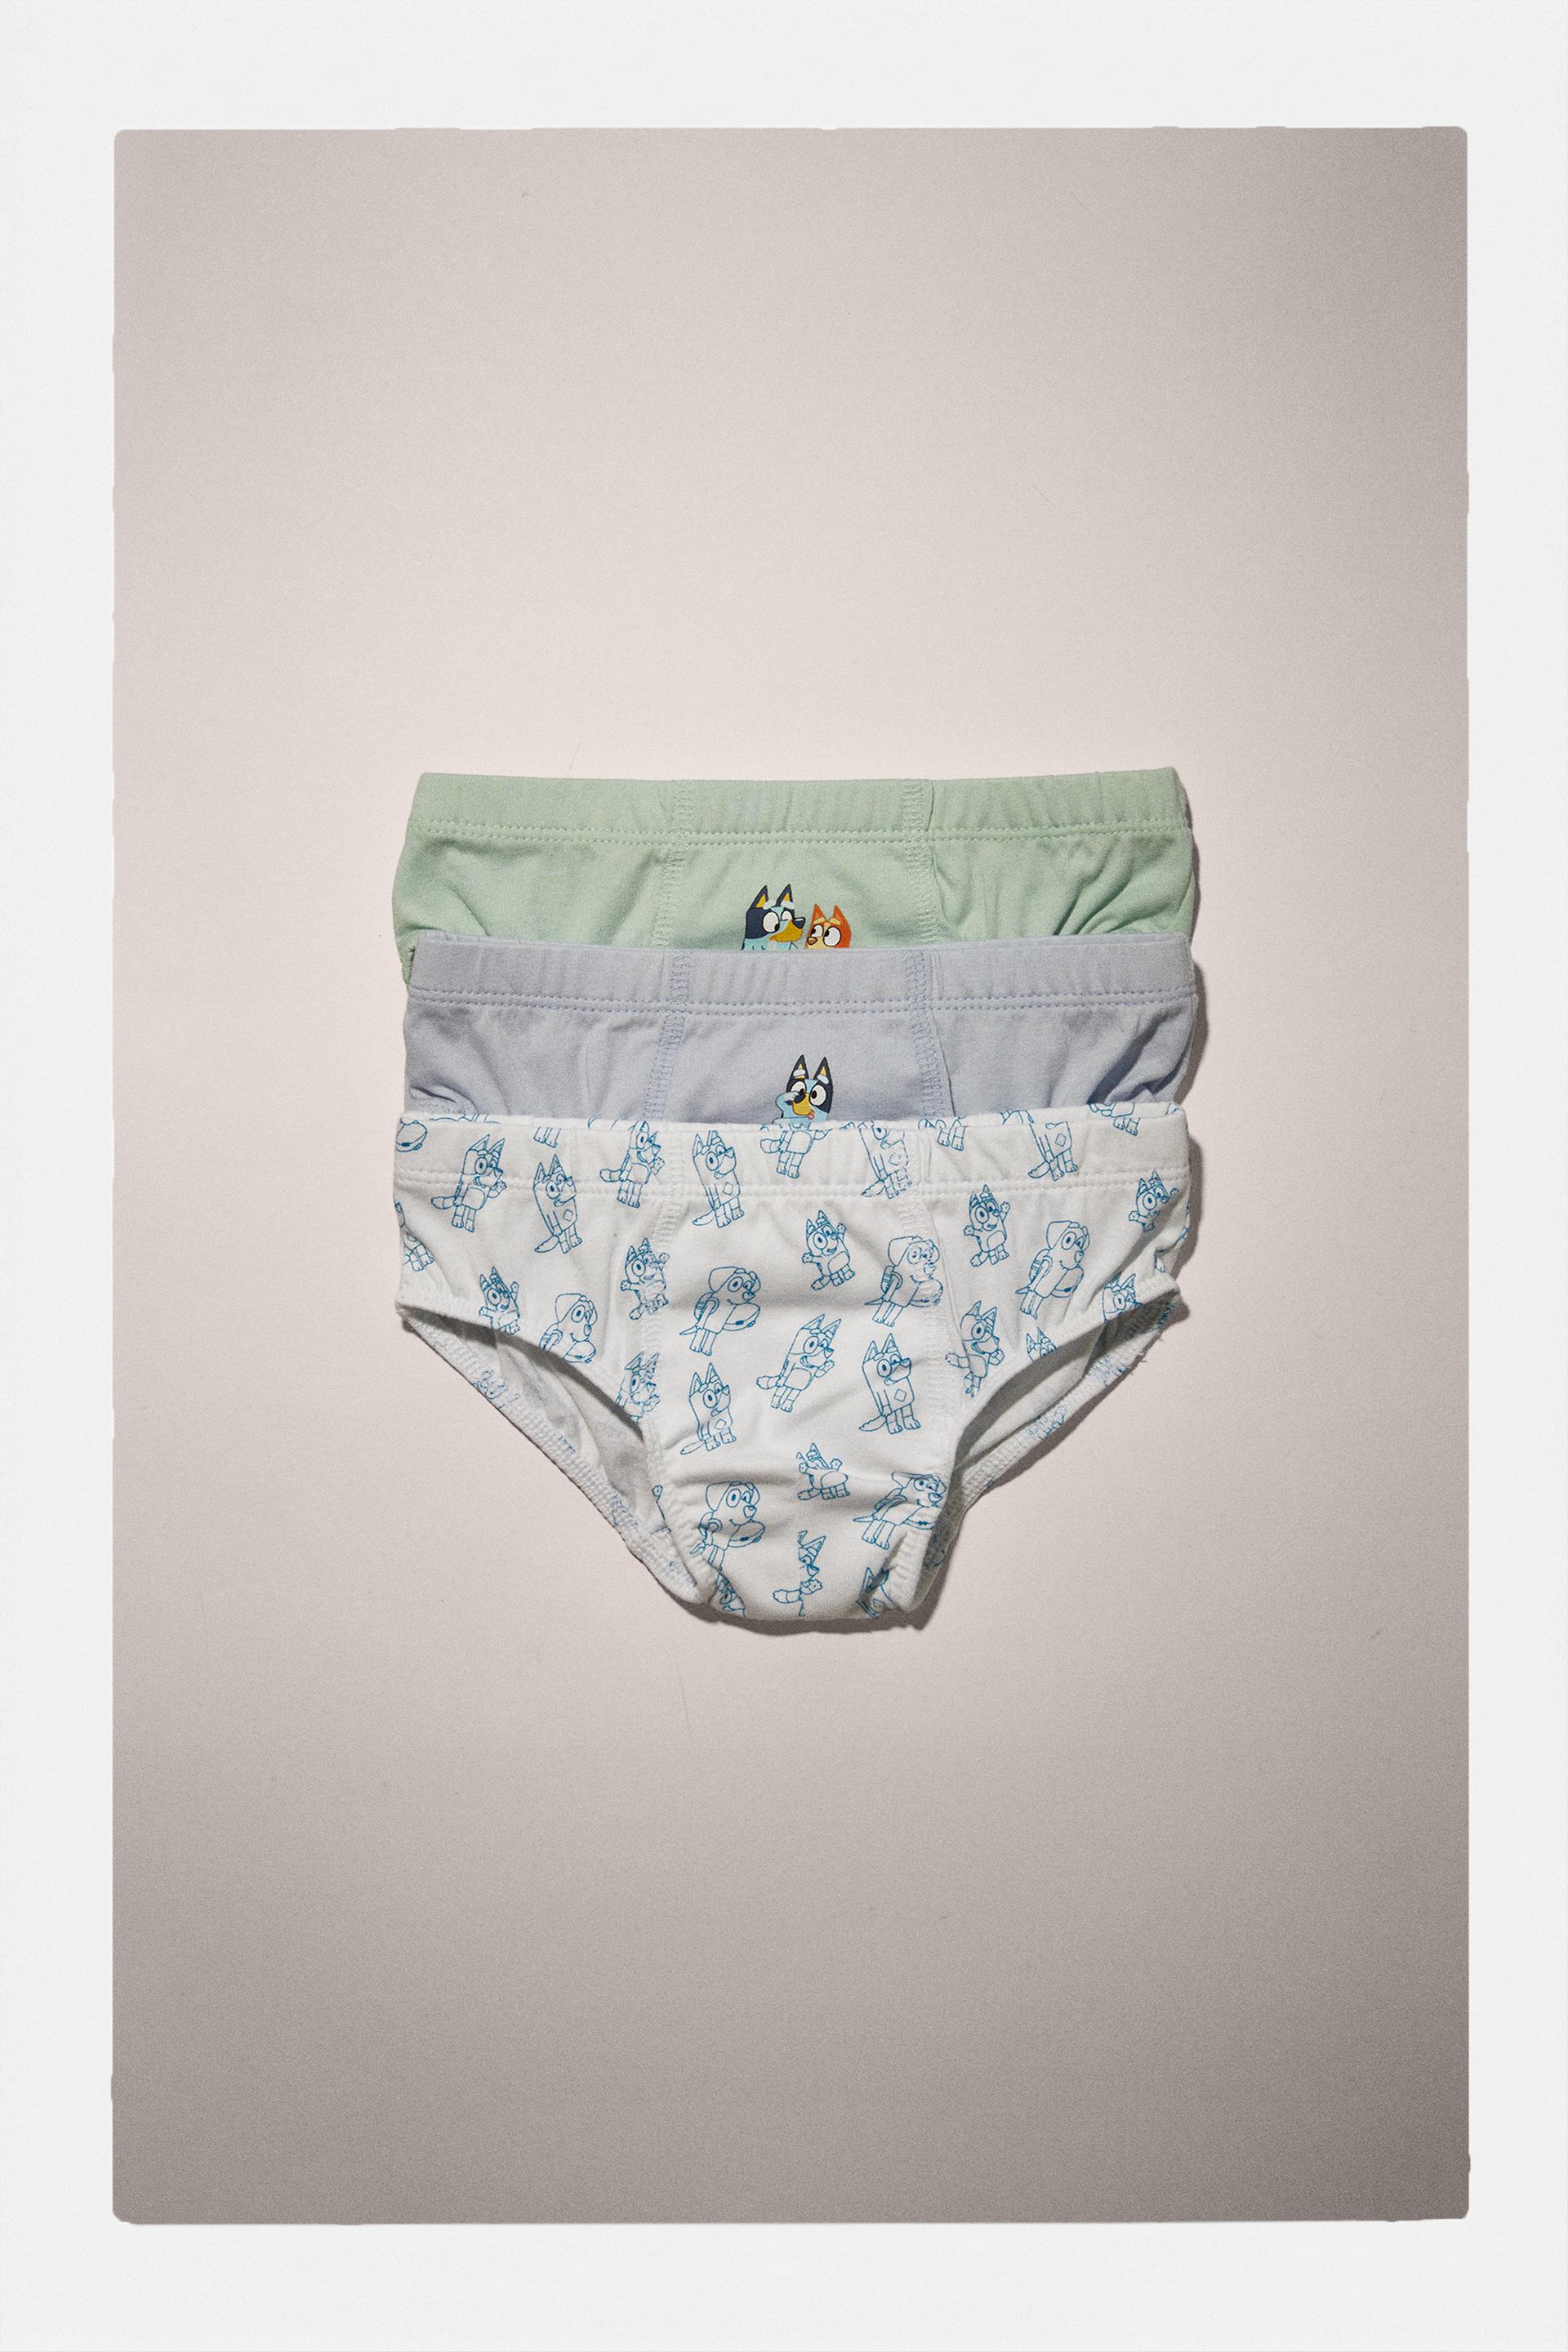 2 PACK BLUEY BINGO UNDERWEAR ~ Kids Boys Boxer Trunks Underpants Briefs